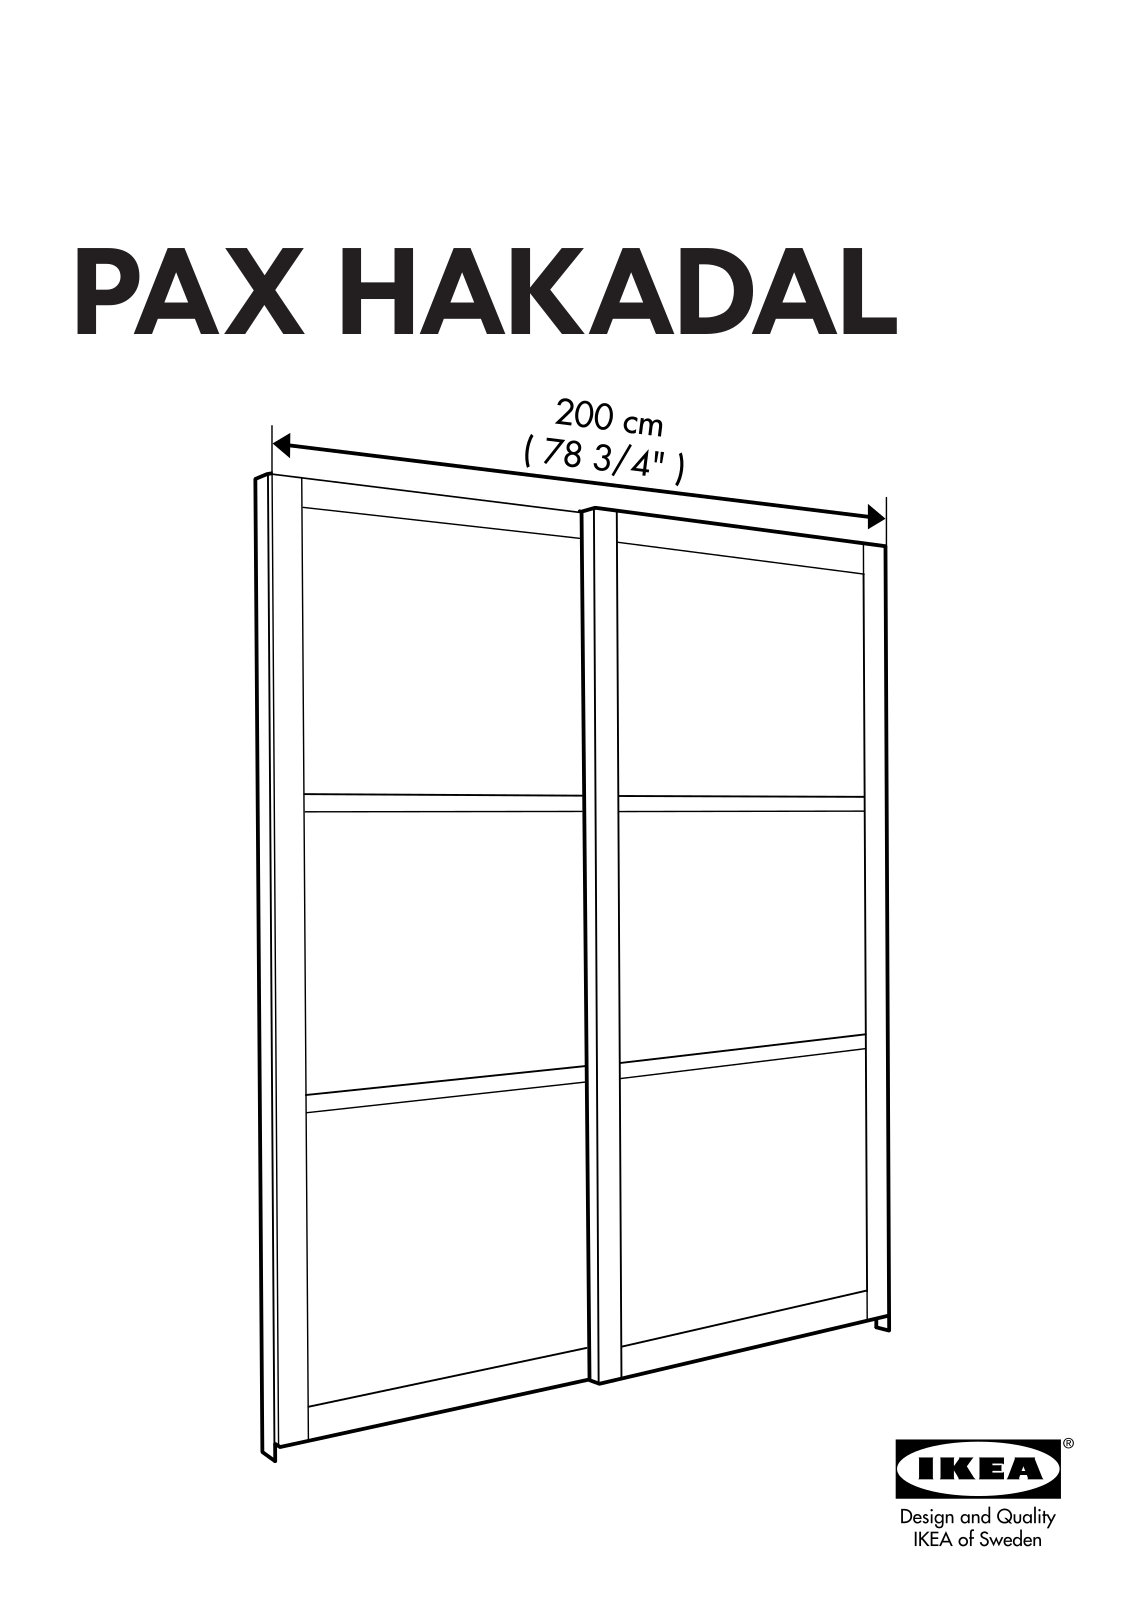 IKEA PAX HAKADAL SLIDING DOOR PAIR 79X93 Assembly Instruction